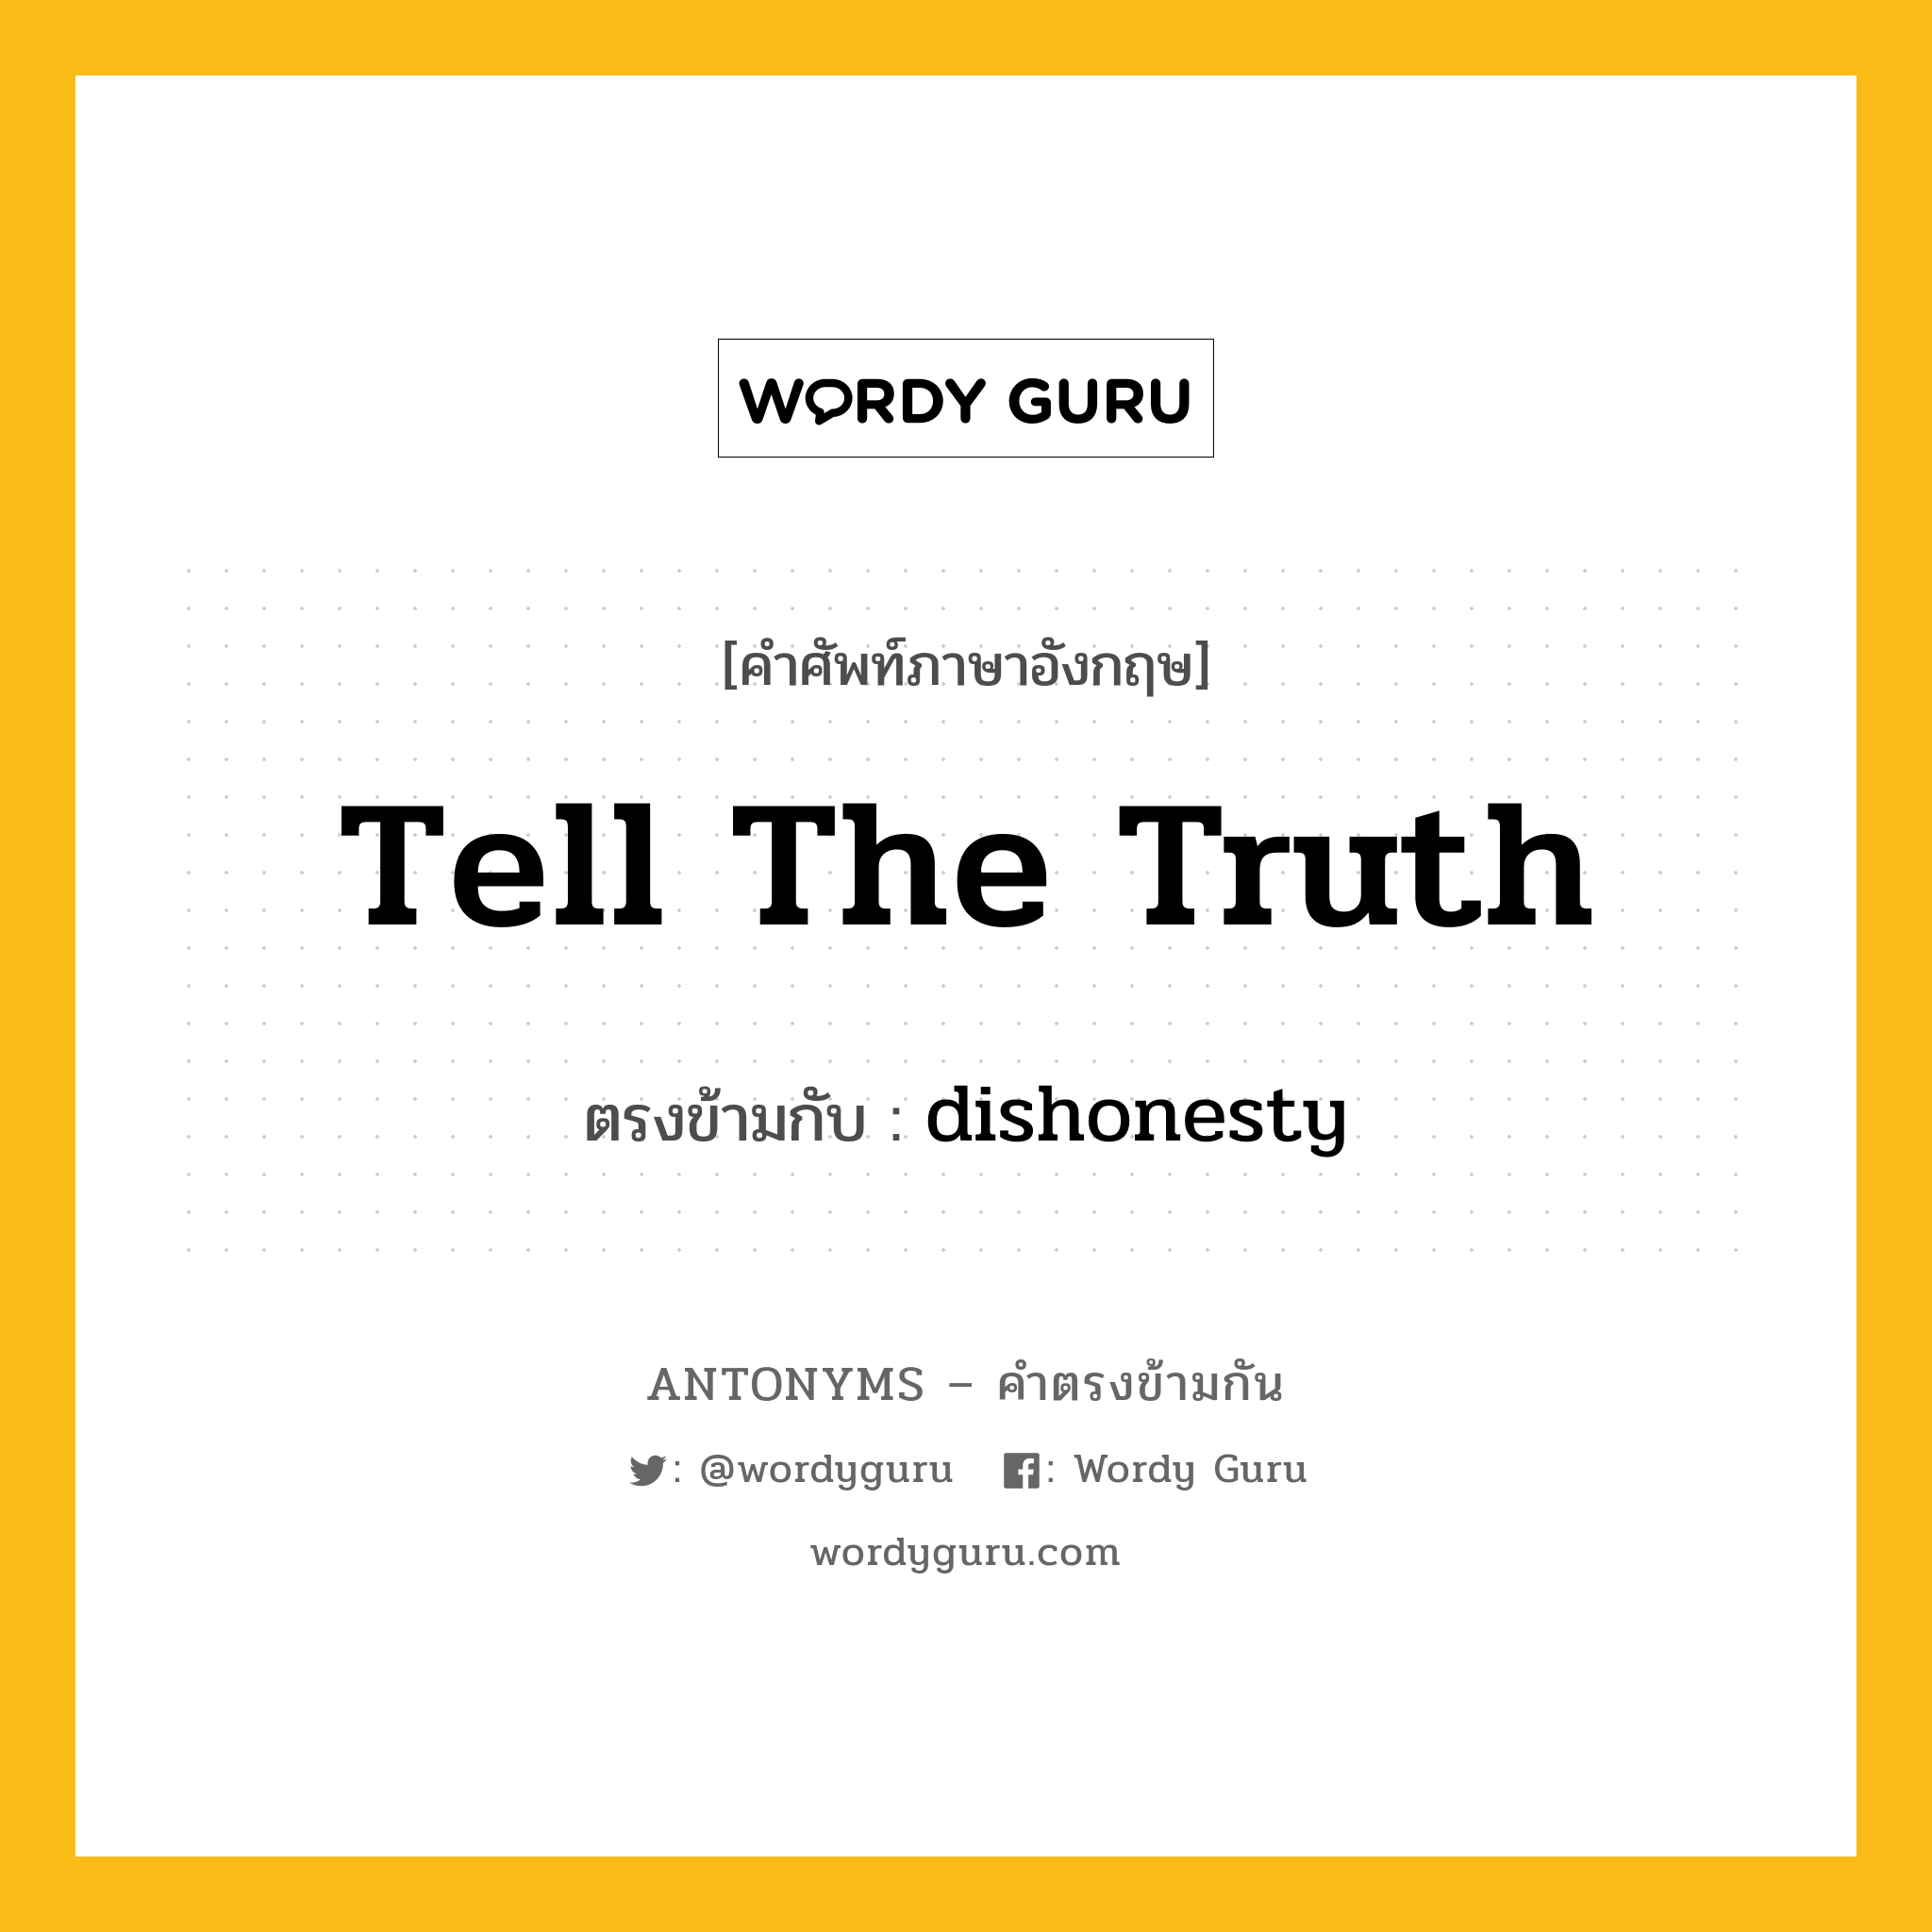 tell the truth เป็นคำตรงข้ามกับคำไหนบ้าง?, คำศัพท์ภาษาอังกฤษ tell the truth ตรงข้ามกับ dishonesty หมวด dishonesty